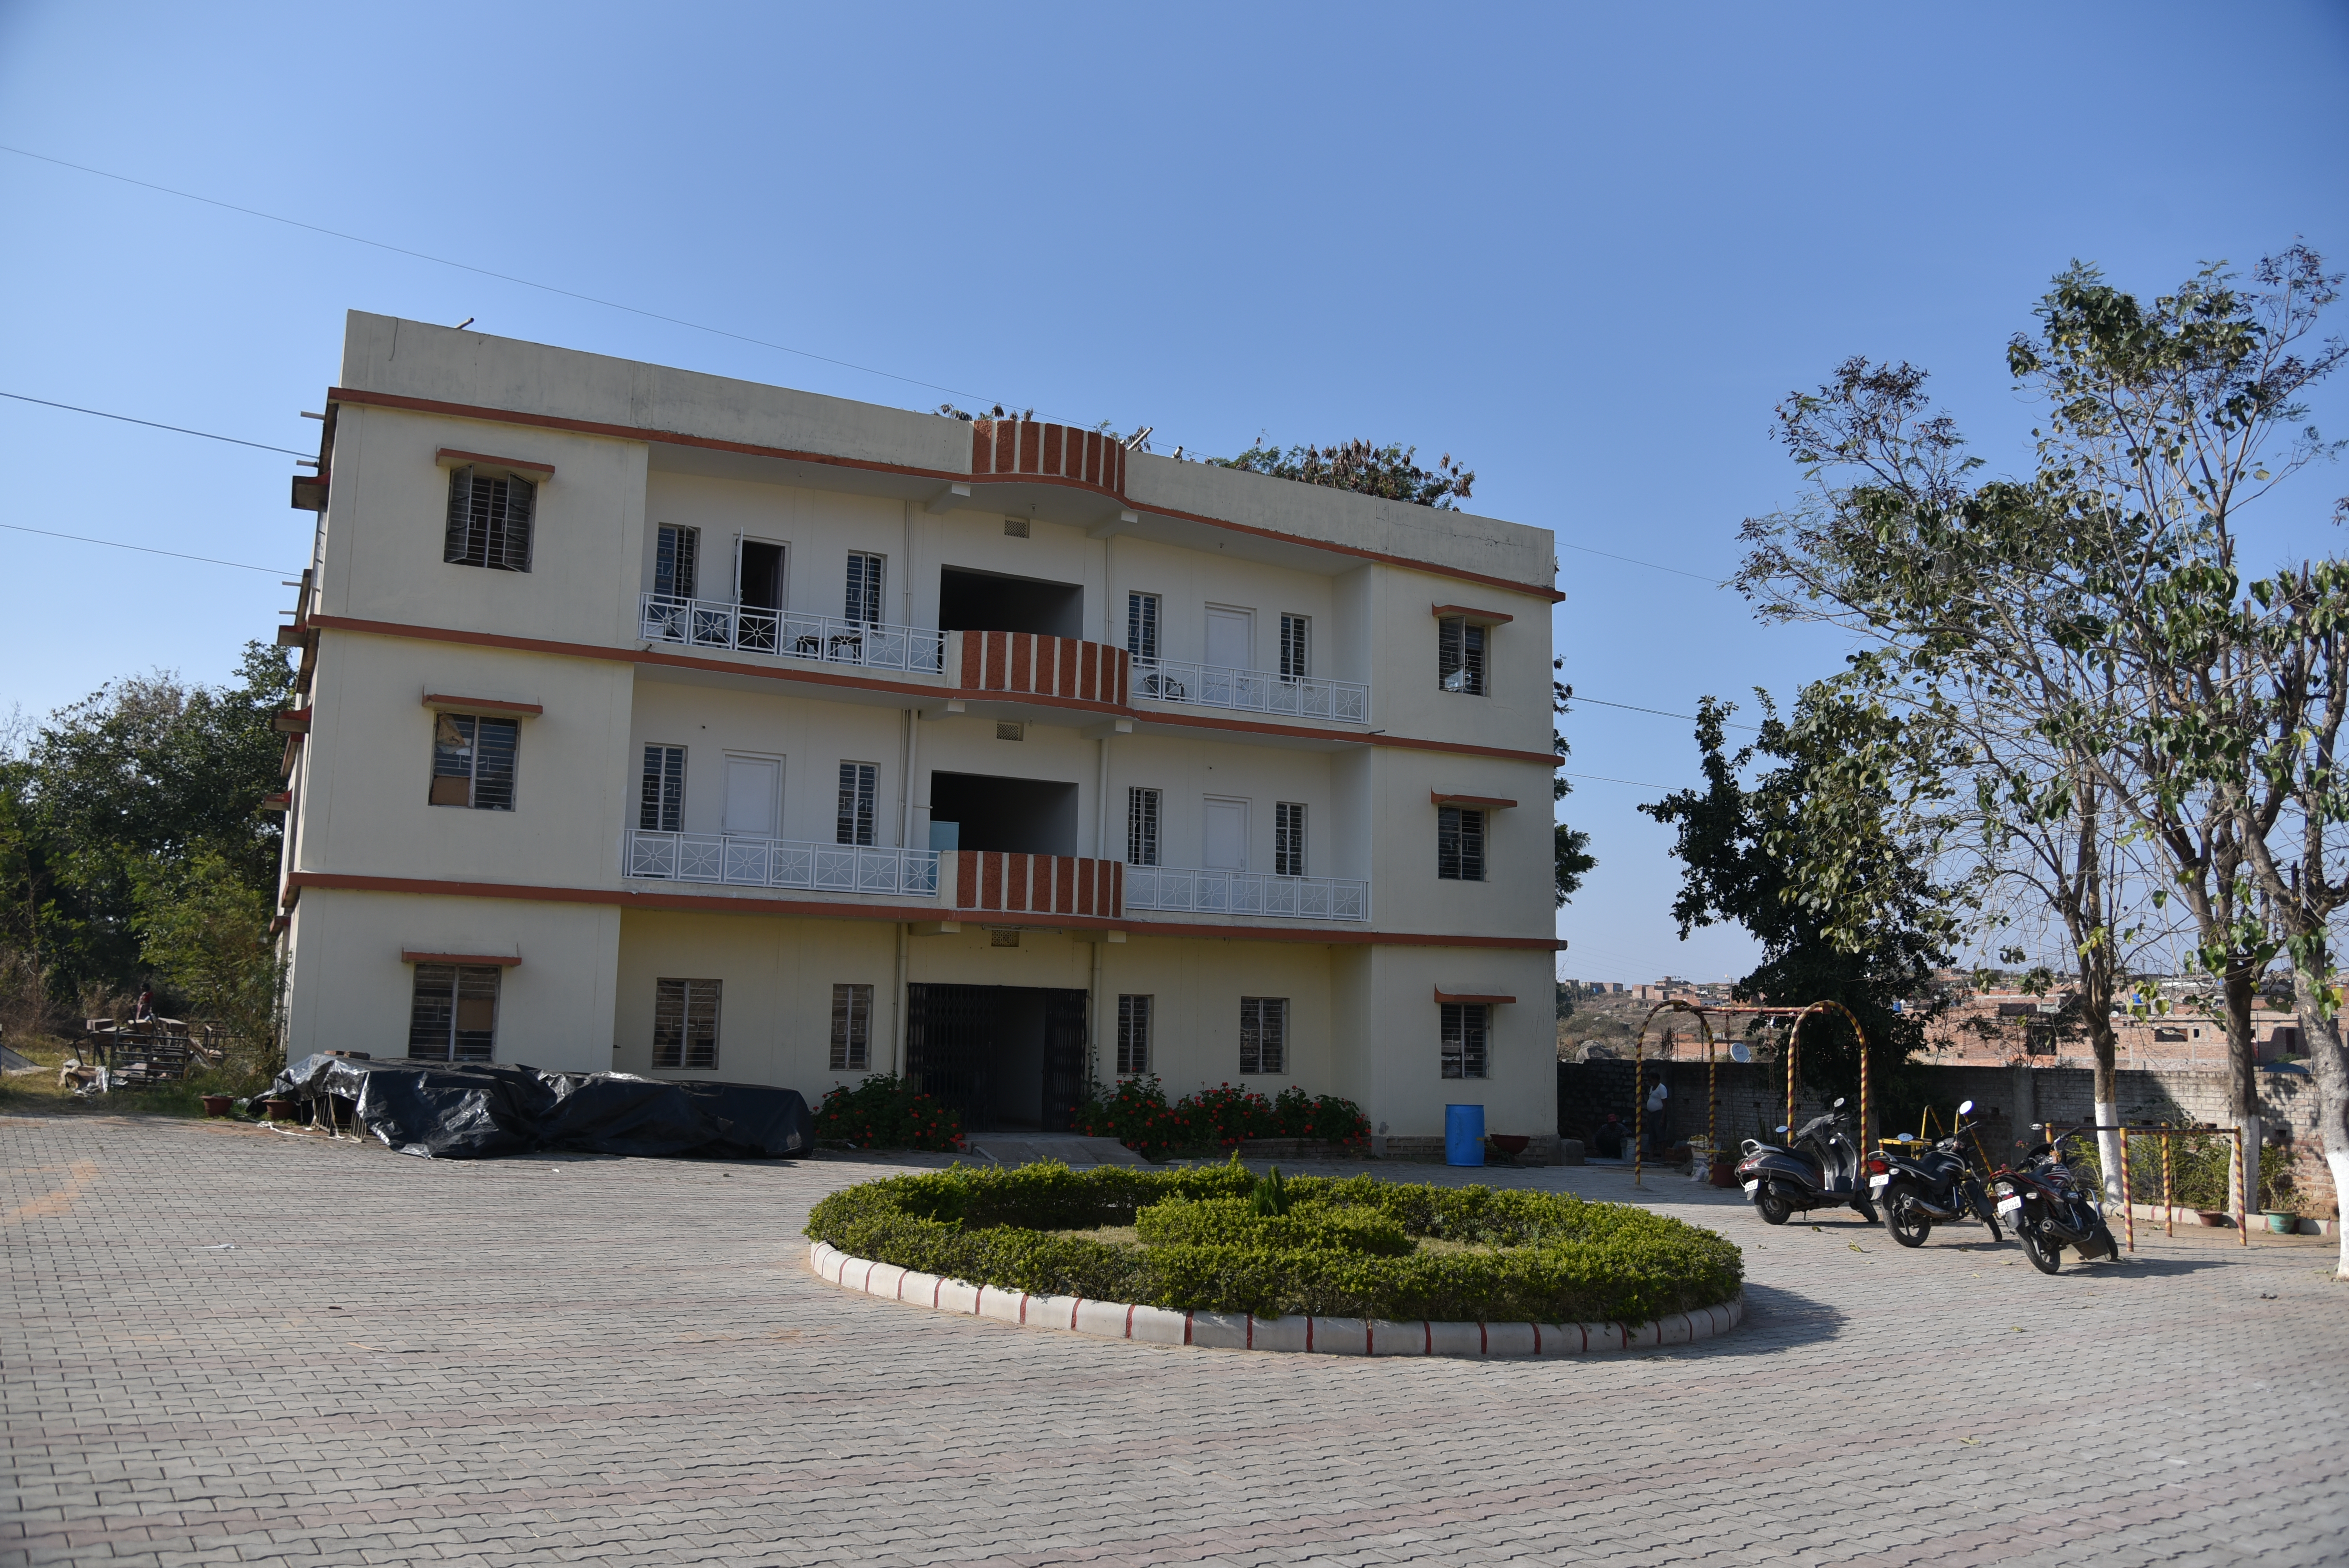 RKDF University Hostel